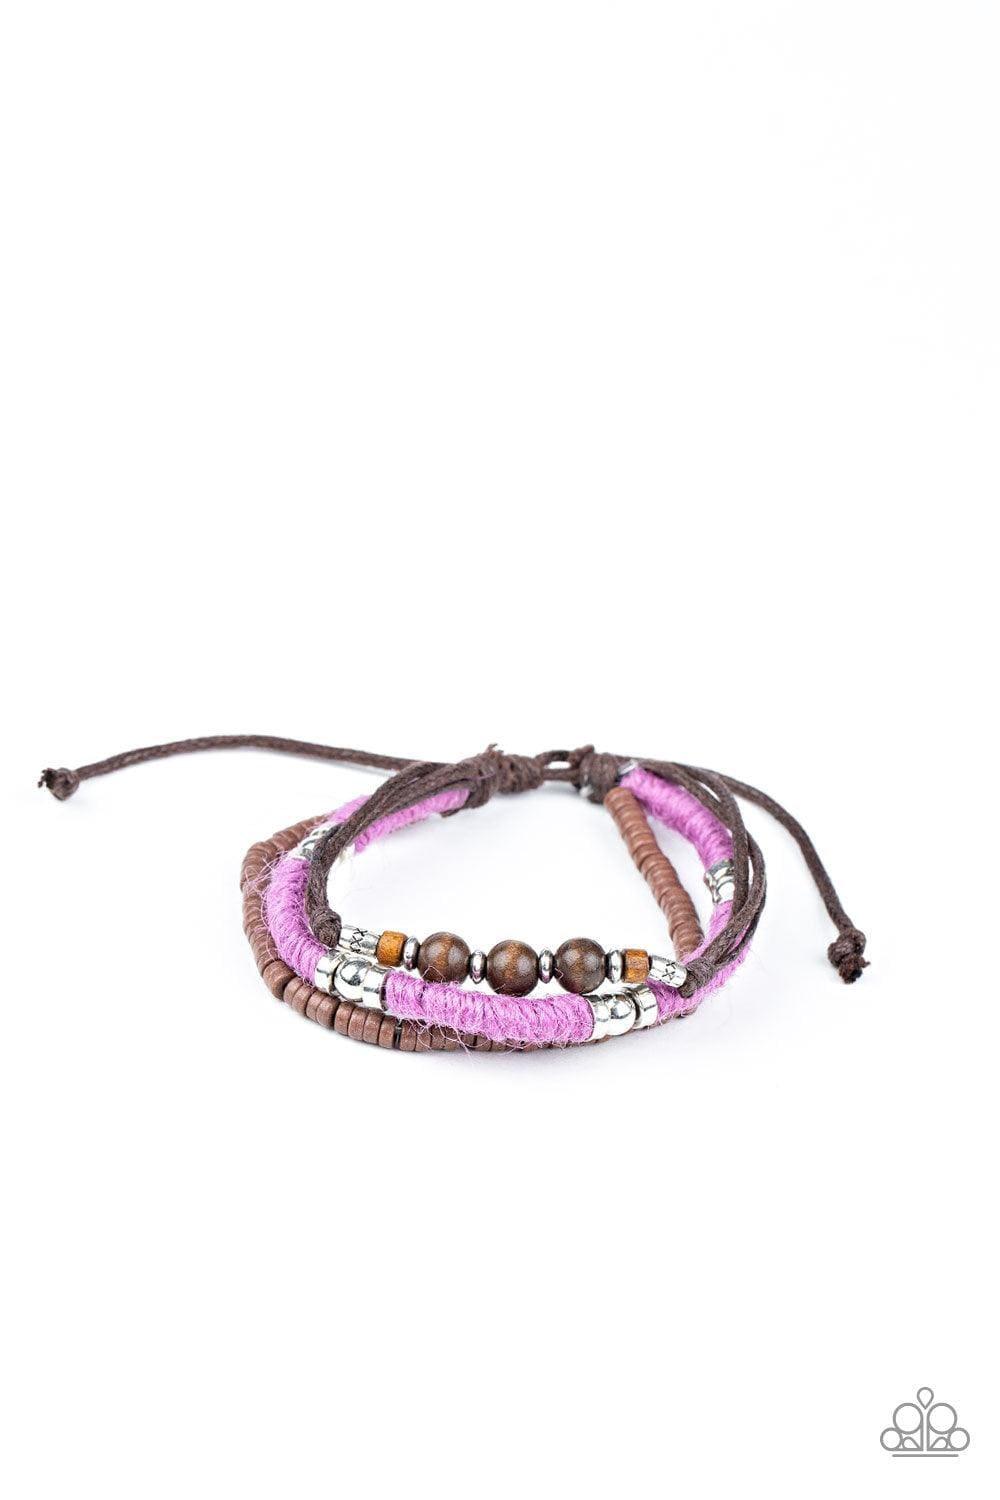 Paparazzi Accessories - Totally Tiki - Purple Urban Bracelet - Bling by JessieK